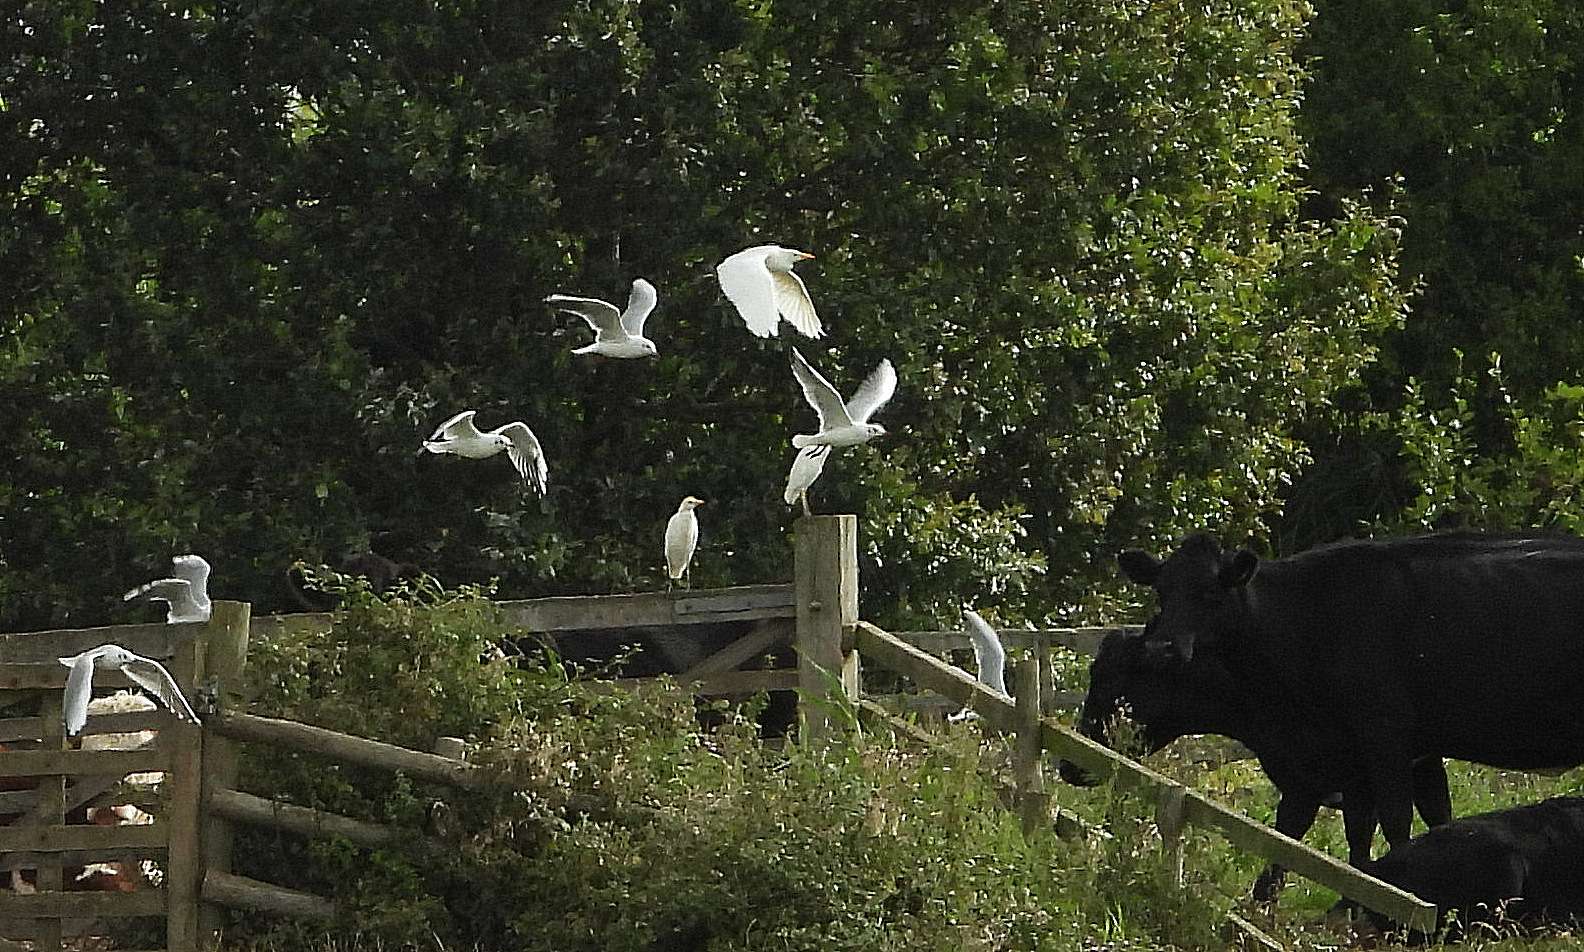 Cattle Egret by Kenneth Bradley at Exminster marshes RSPB